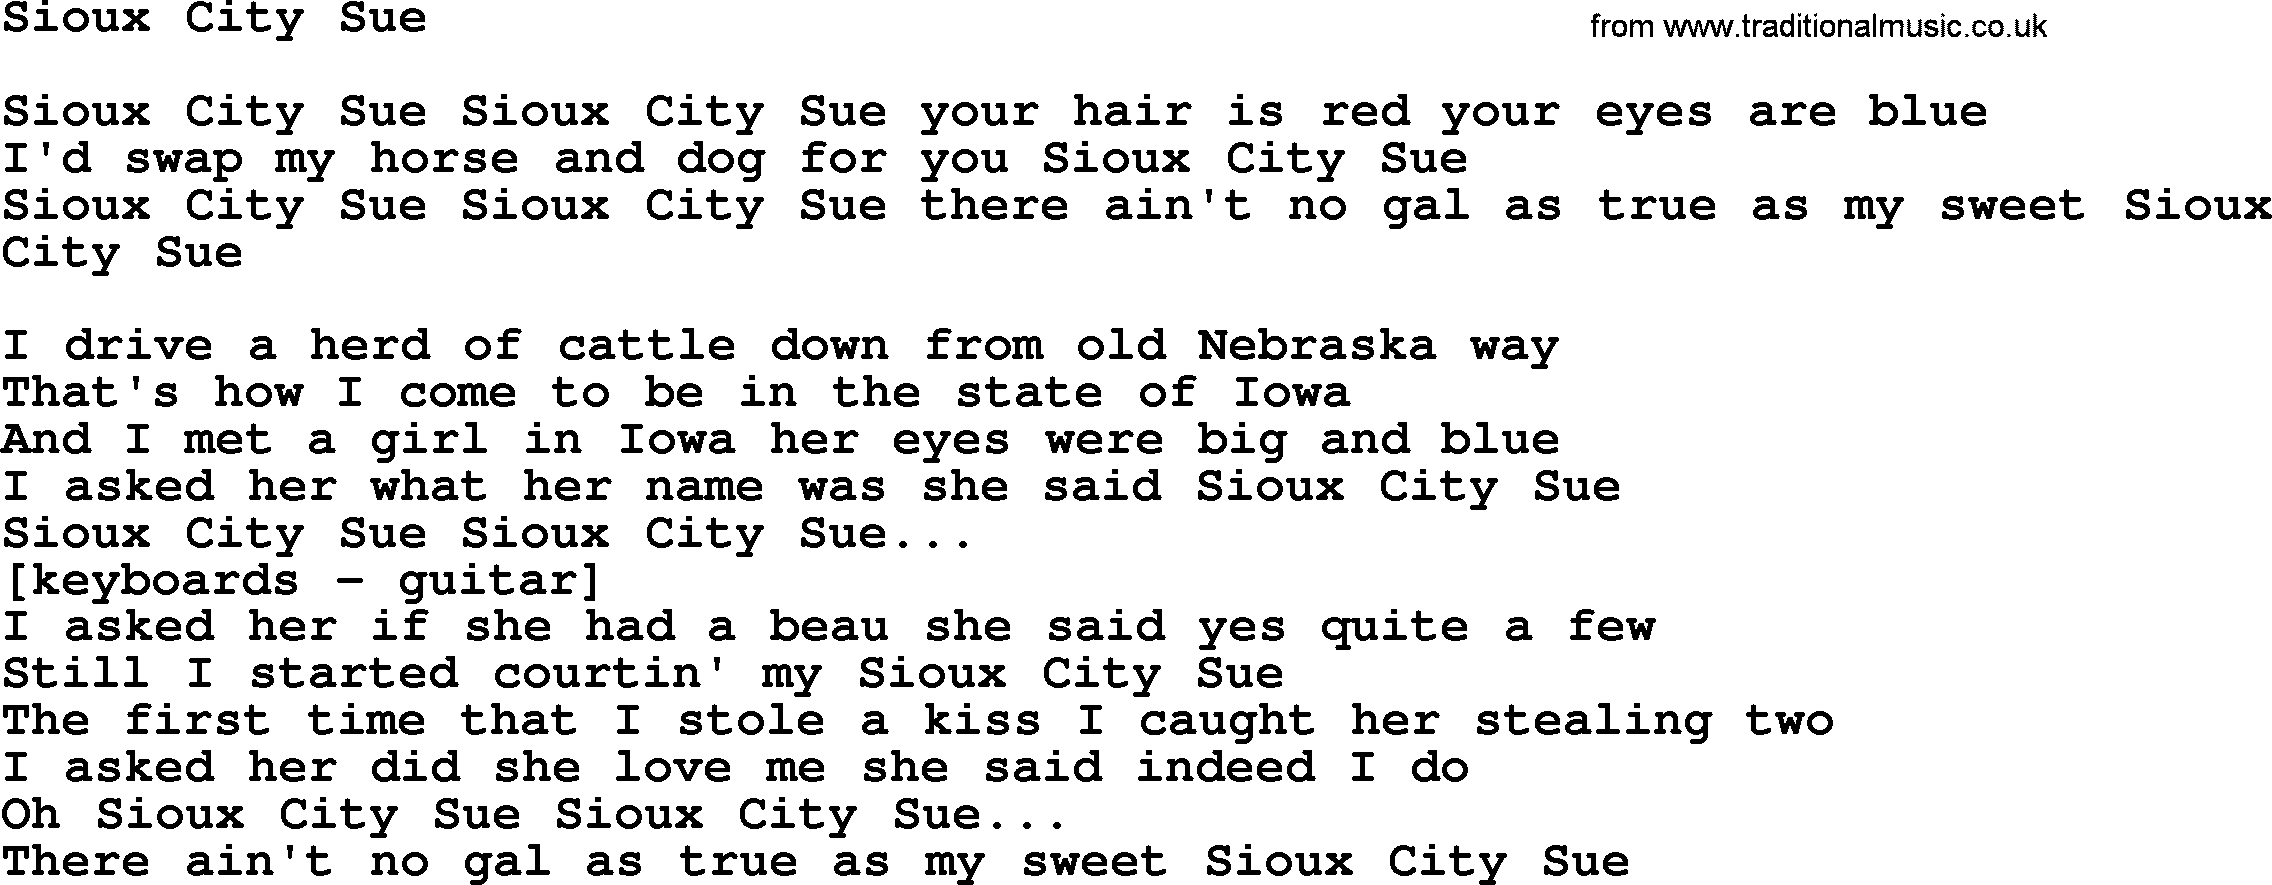 Willie Nelson song: Sioux City Sue lyrics